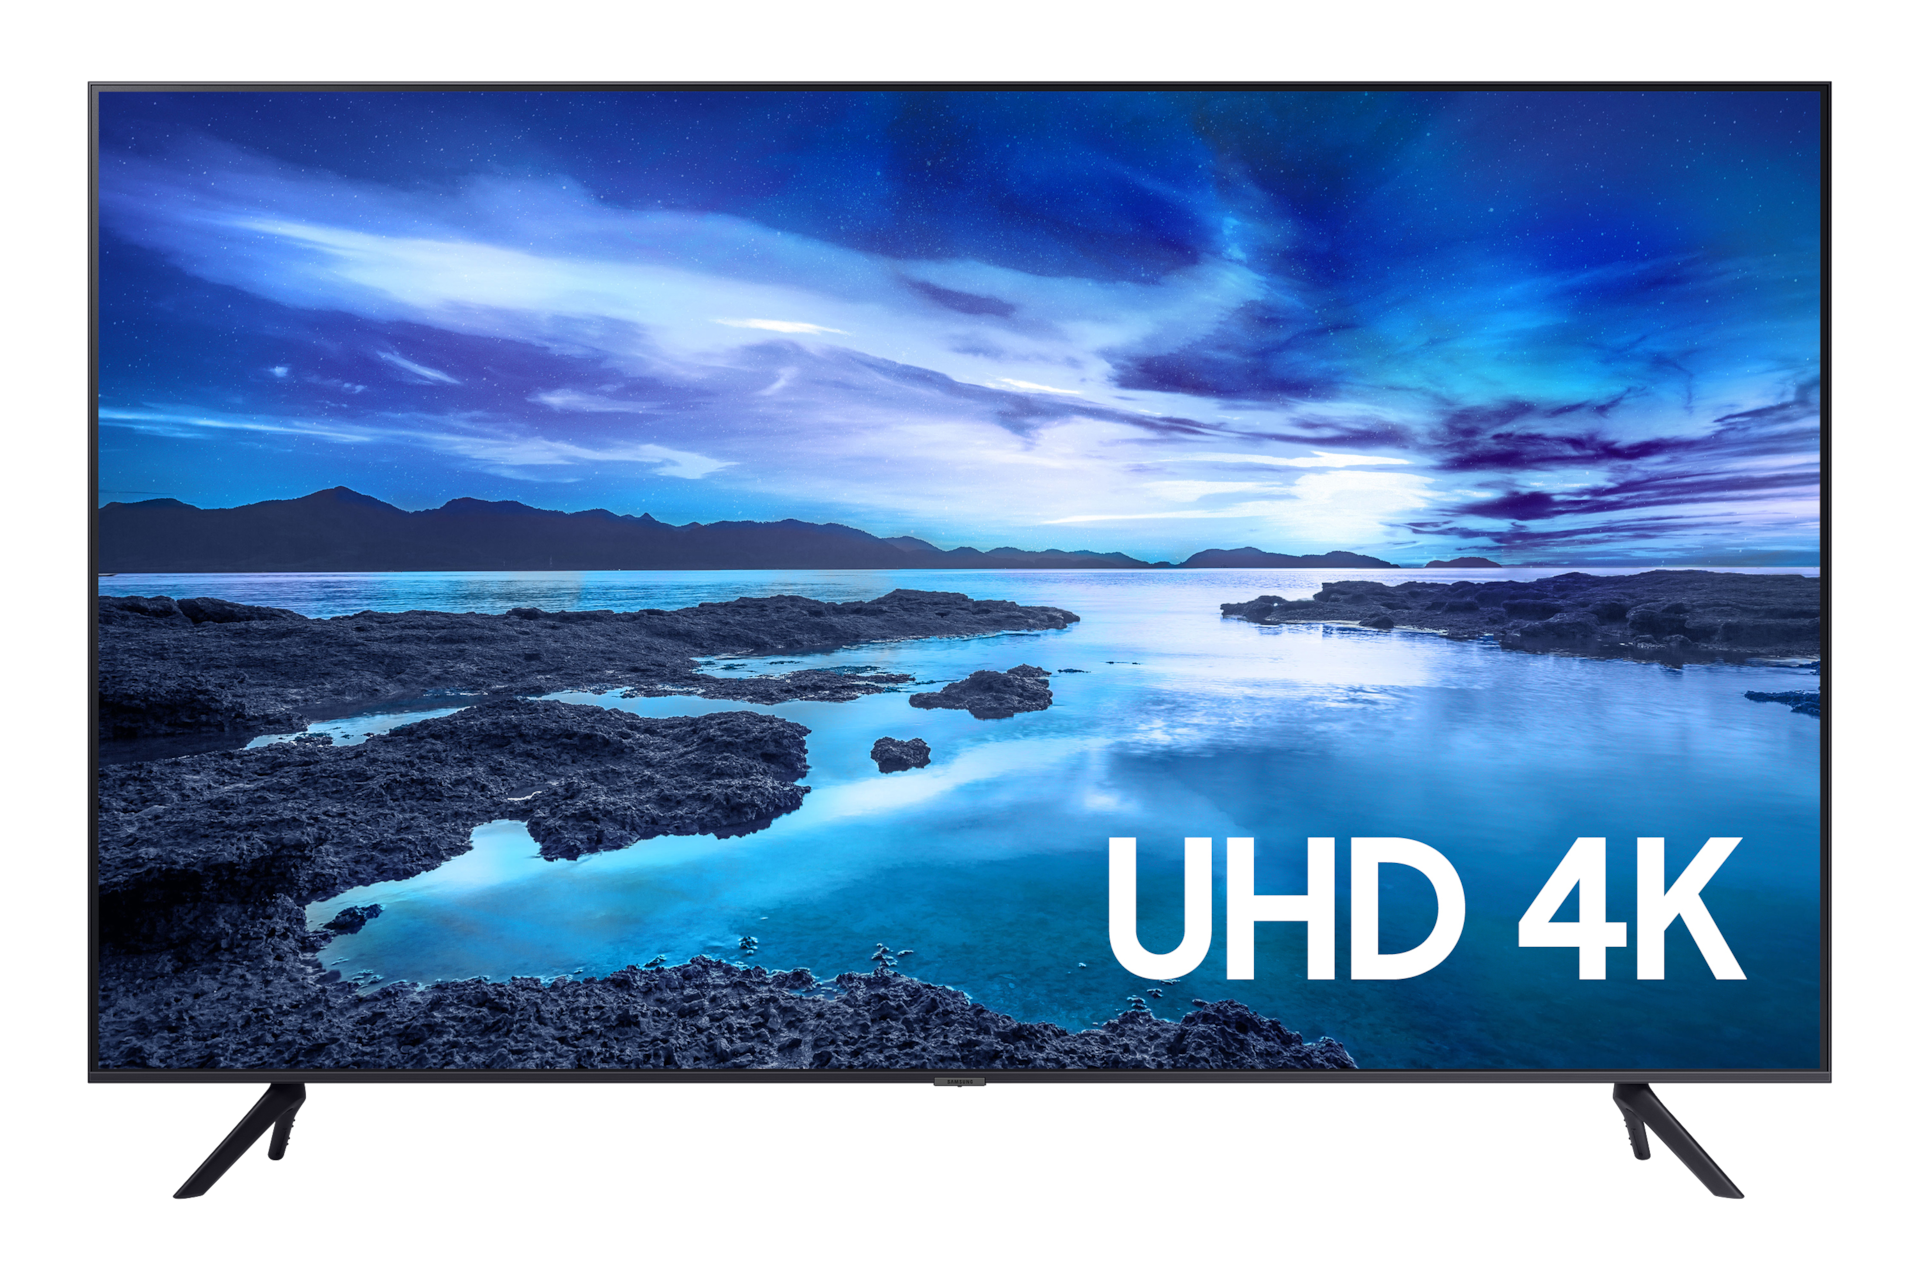 Televisor Smart UHD 4K Samsung 43 pulgadas Led UN43AU7